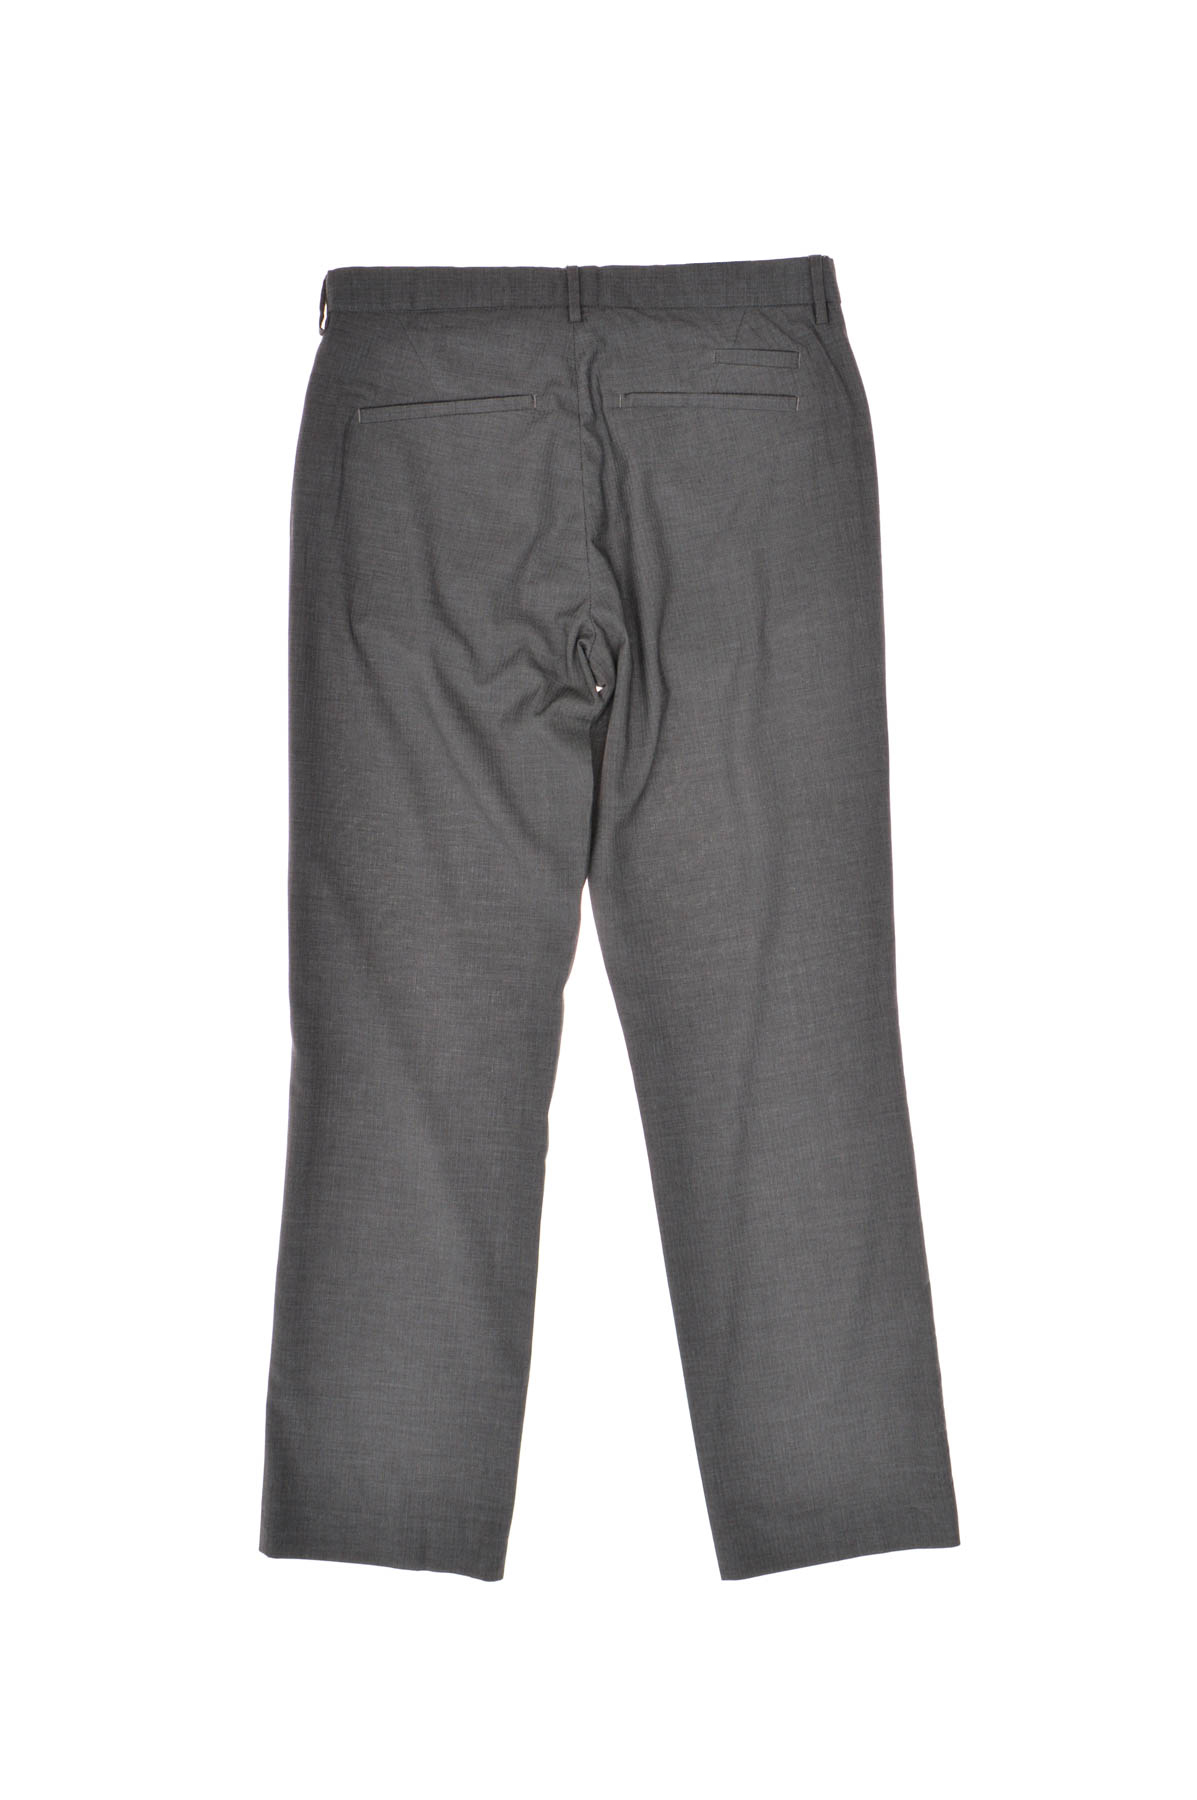 Men's trousers - Calvin Klein - 1